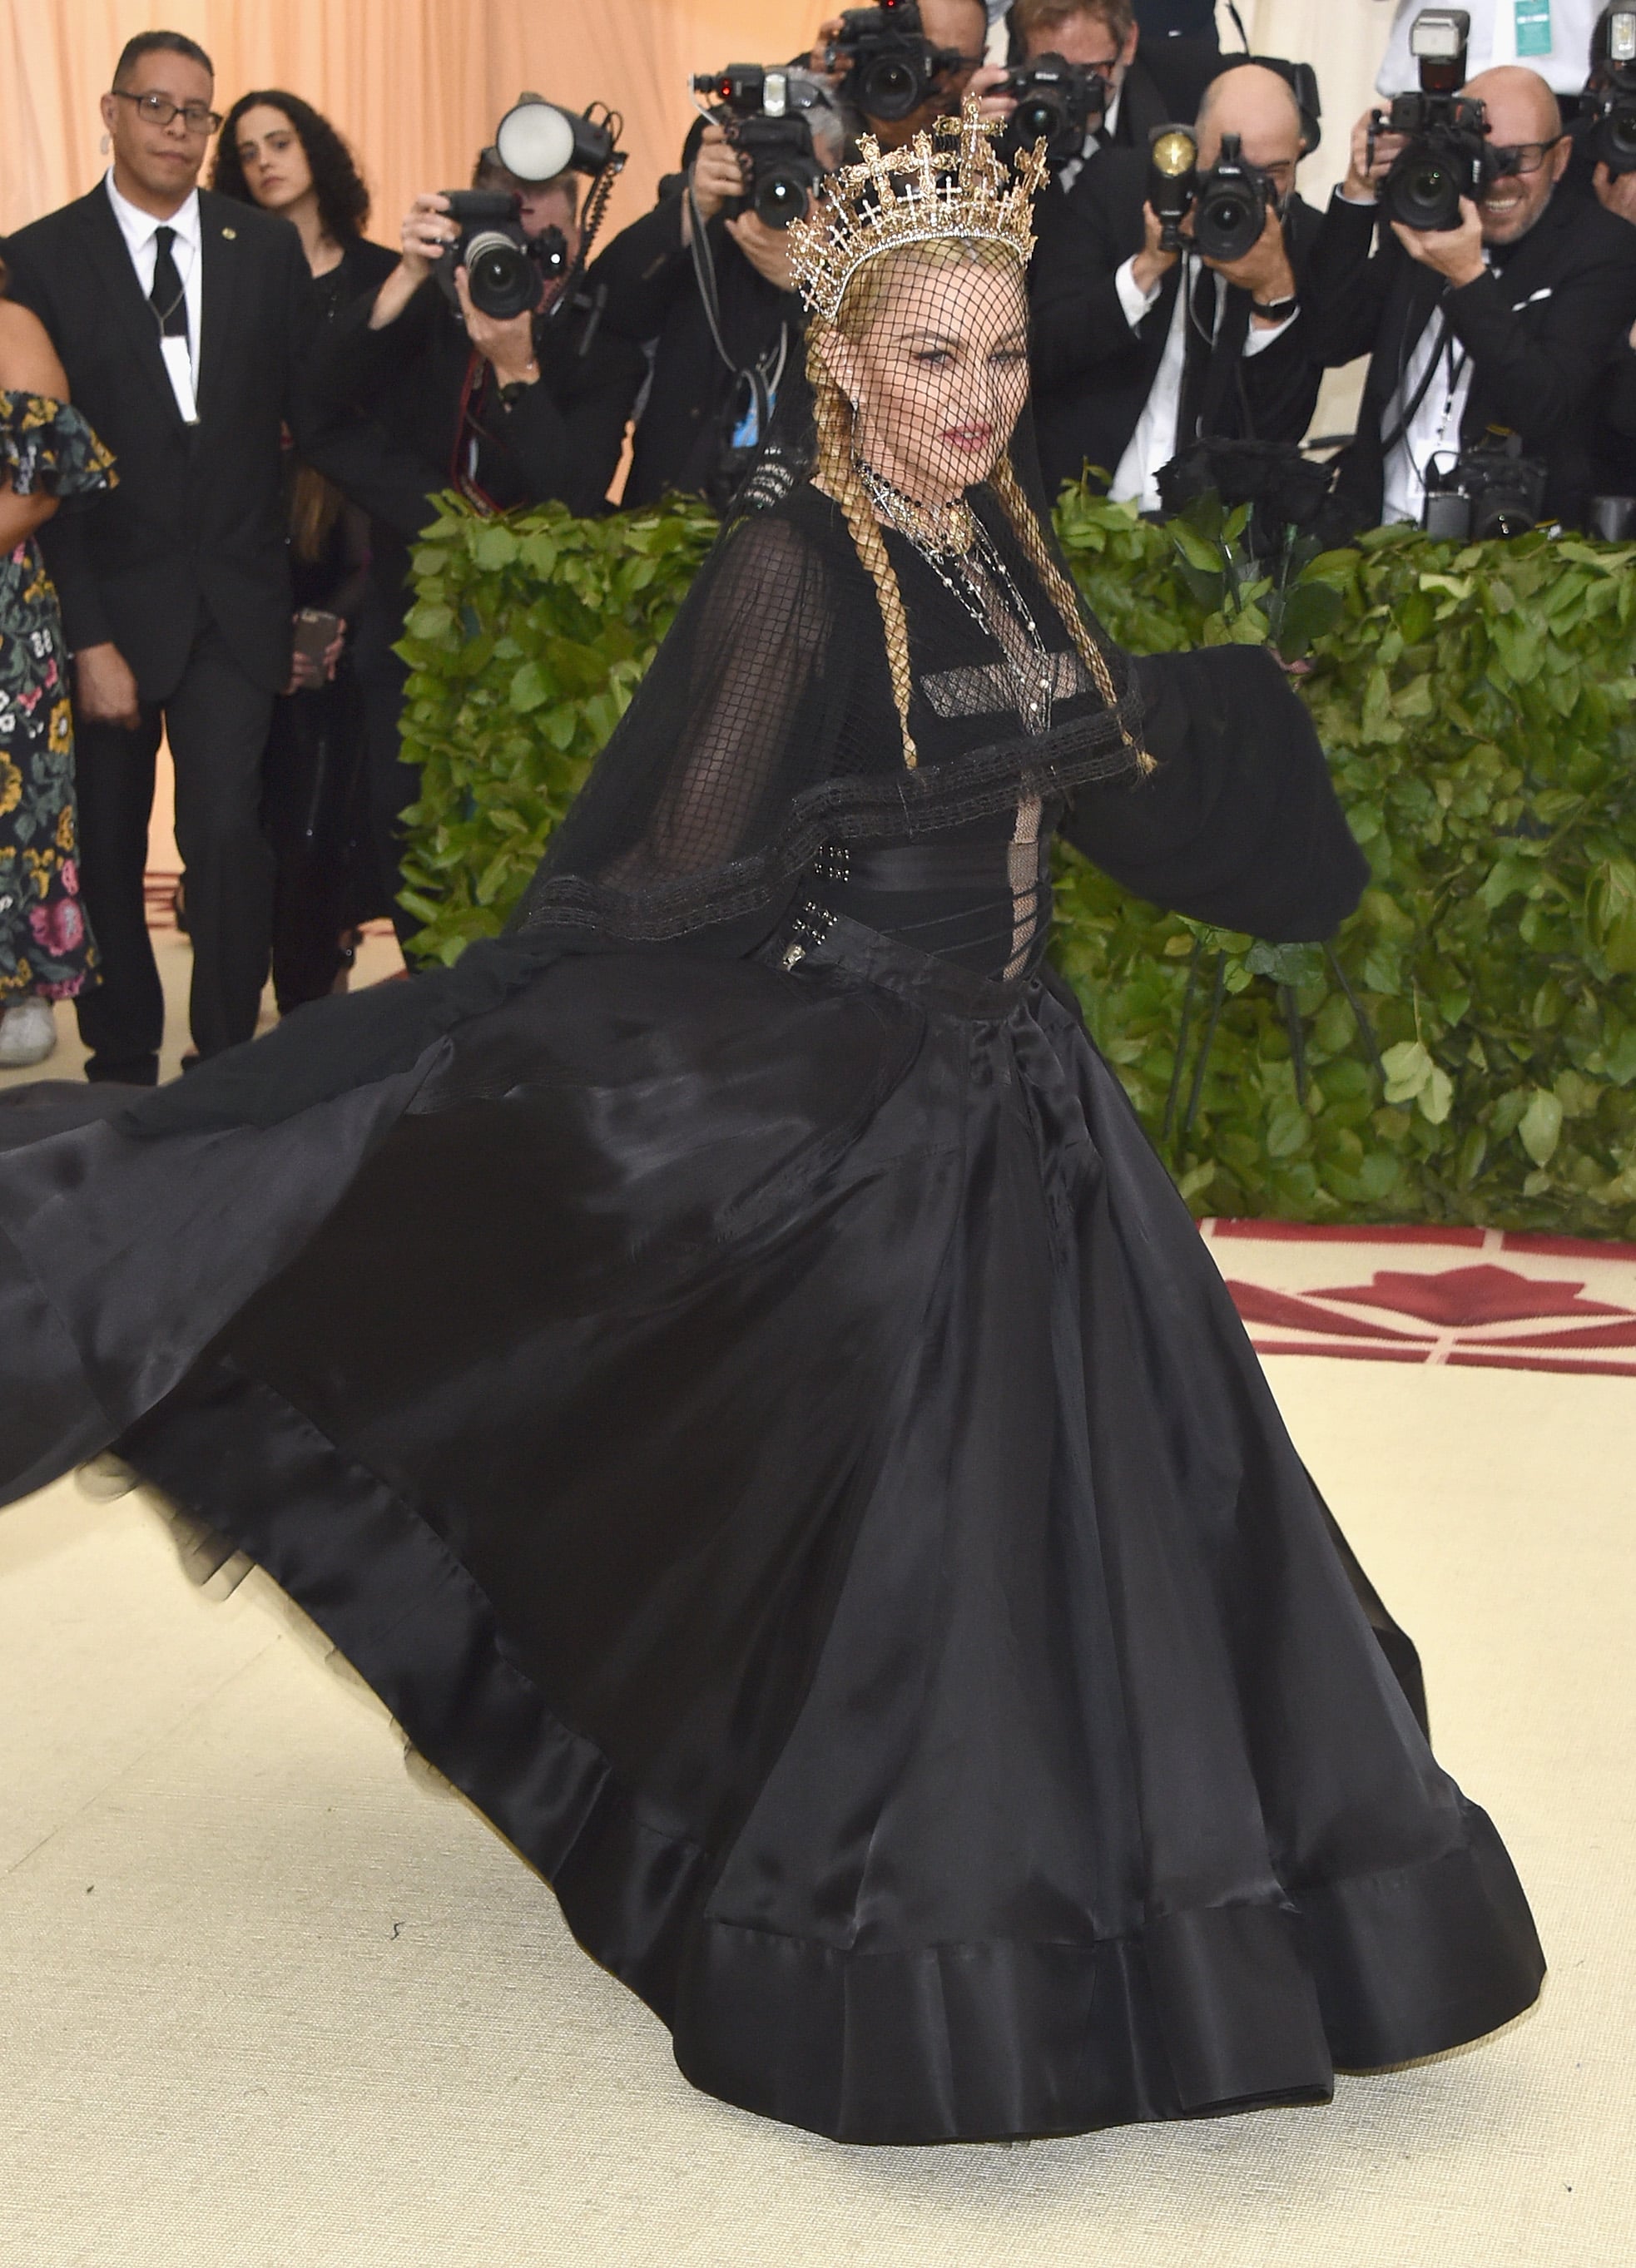 Madonna to perform at Catholic fashion-themed Met Gala